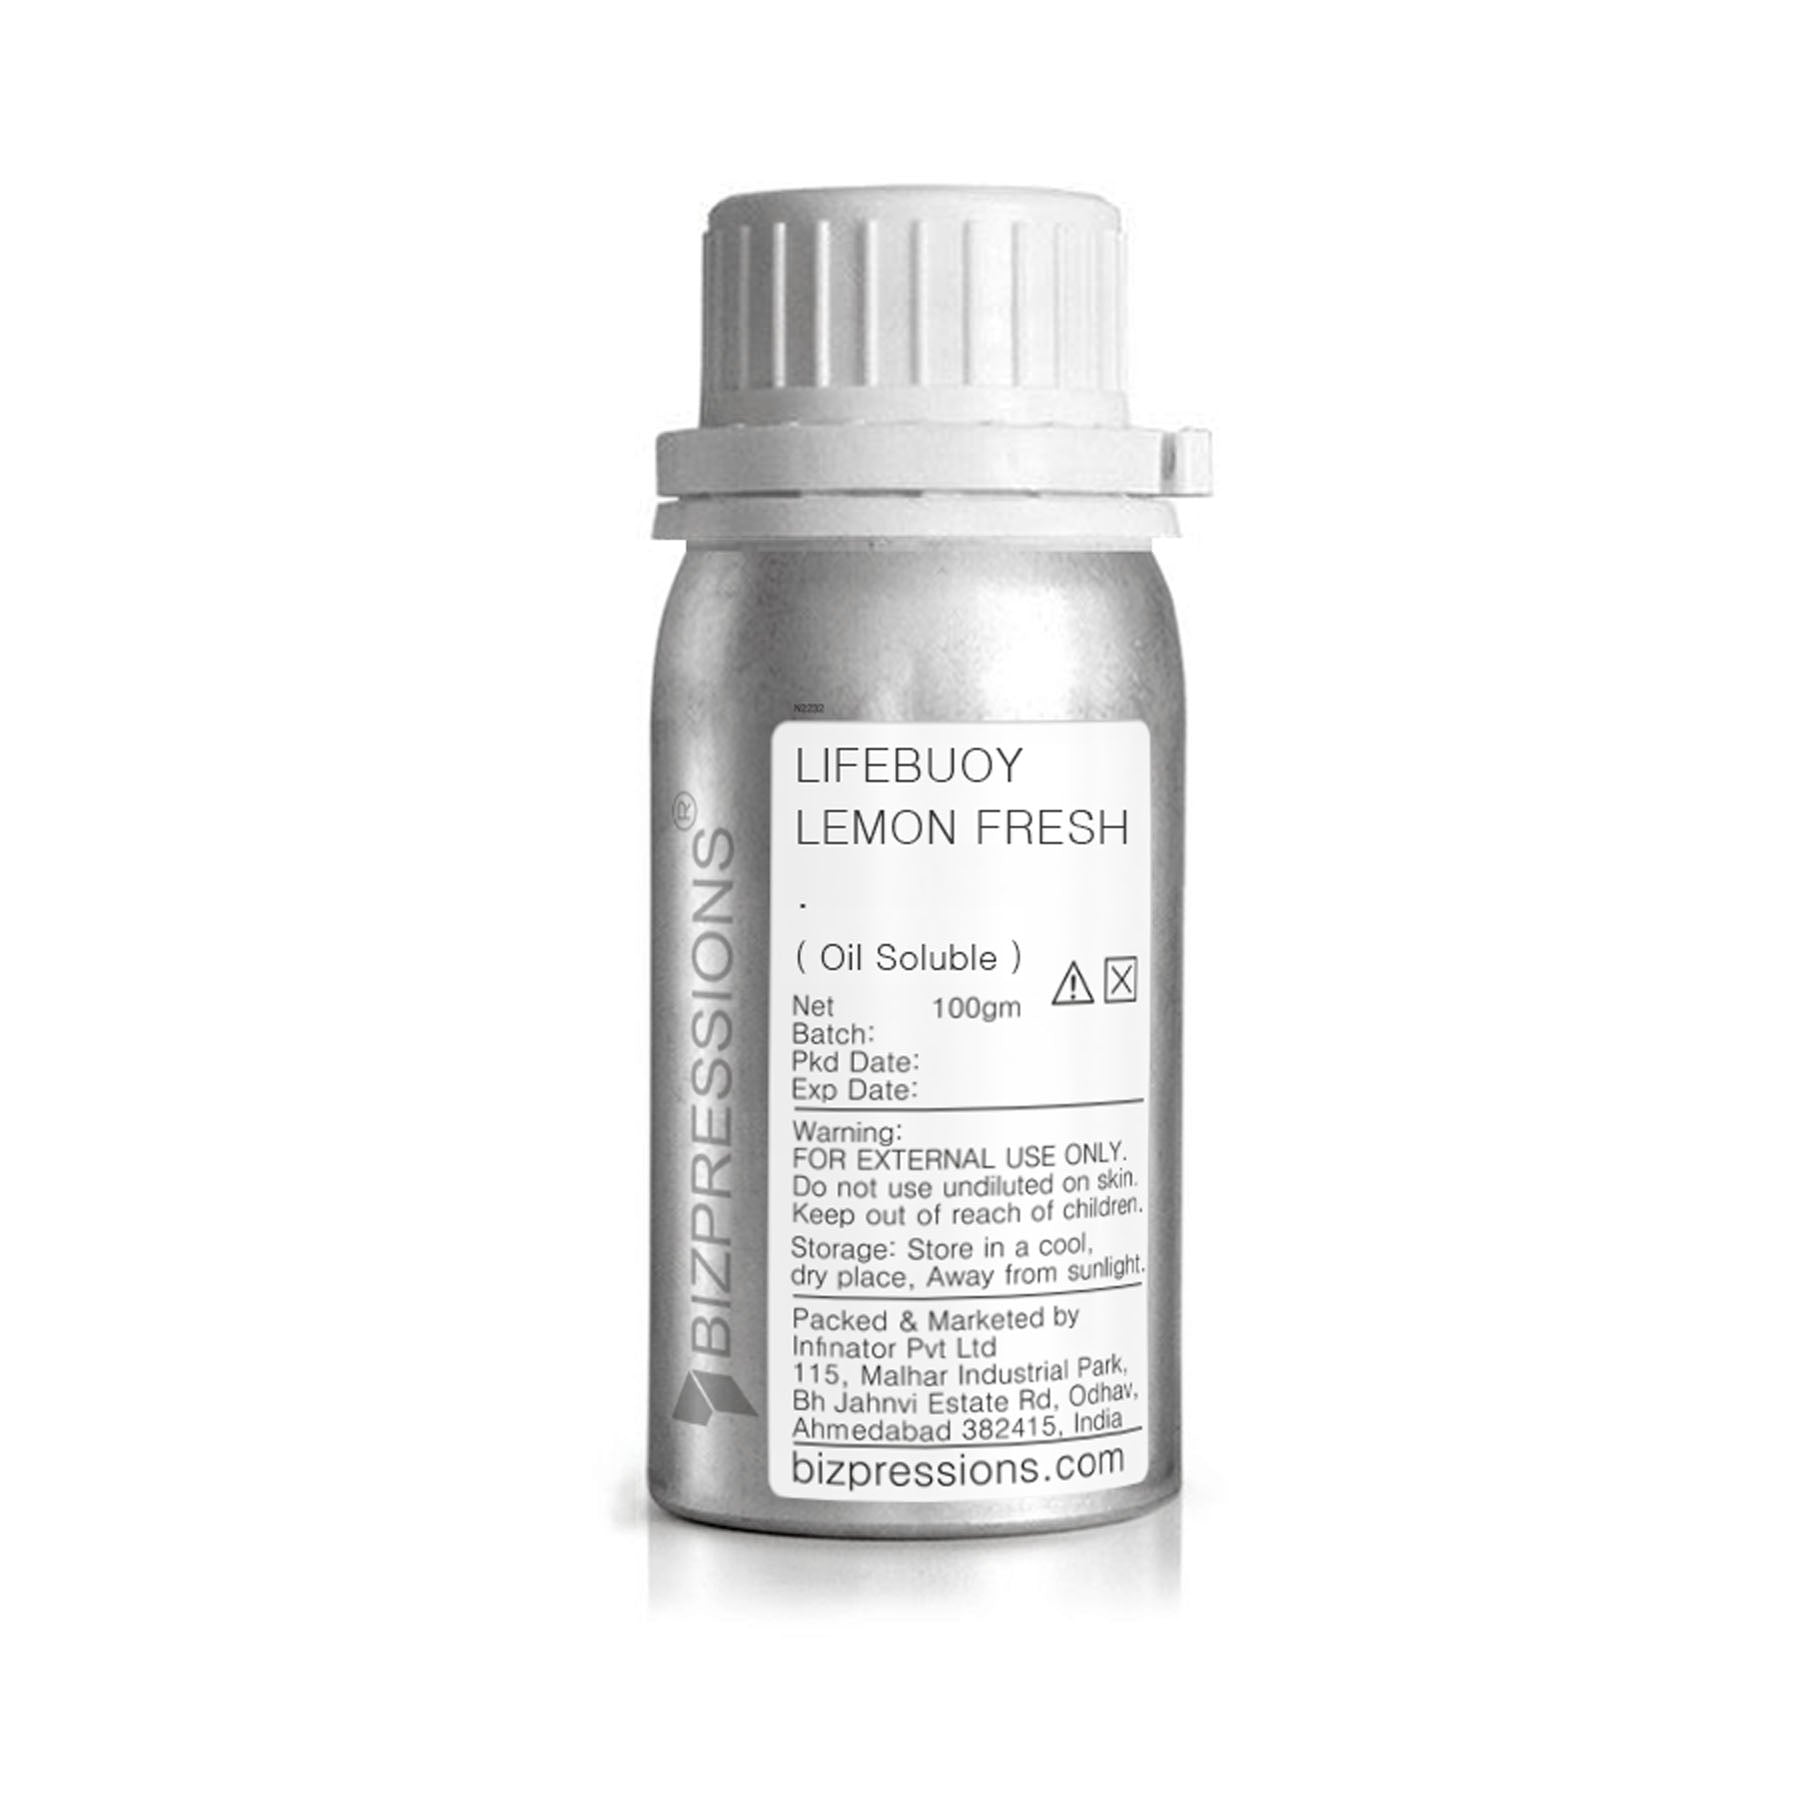 LIFEBUOY LEMON FRESH - Fragrance ( Oil Soluble ) - 100 gm